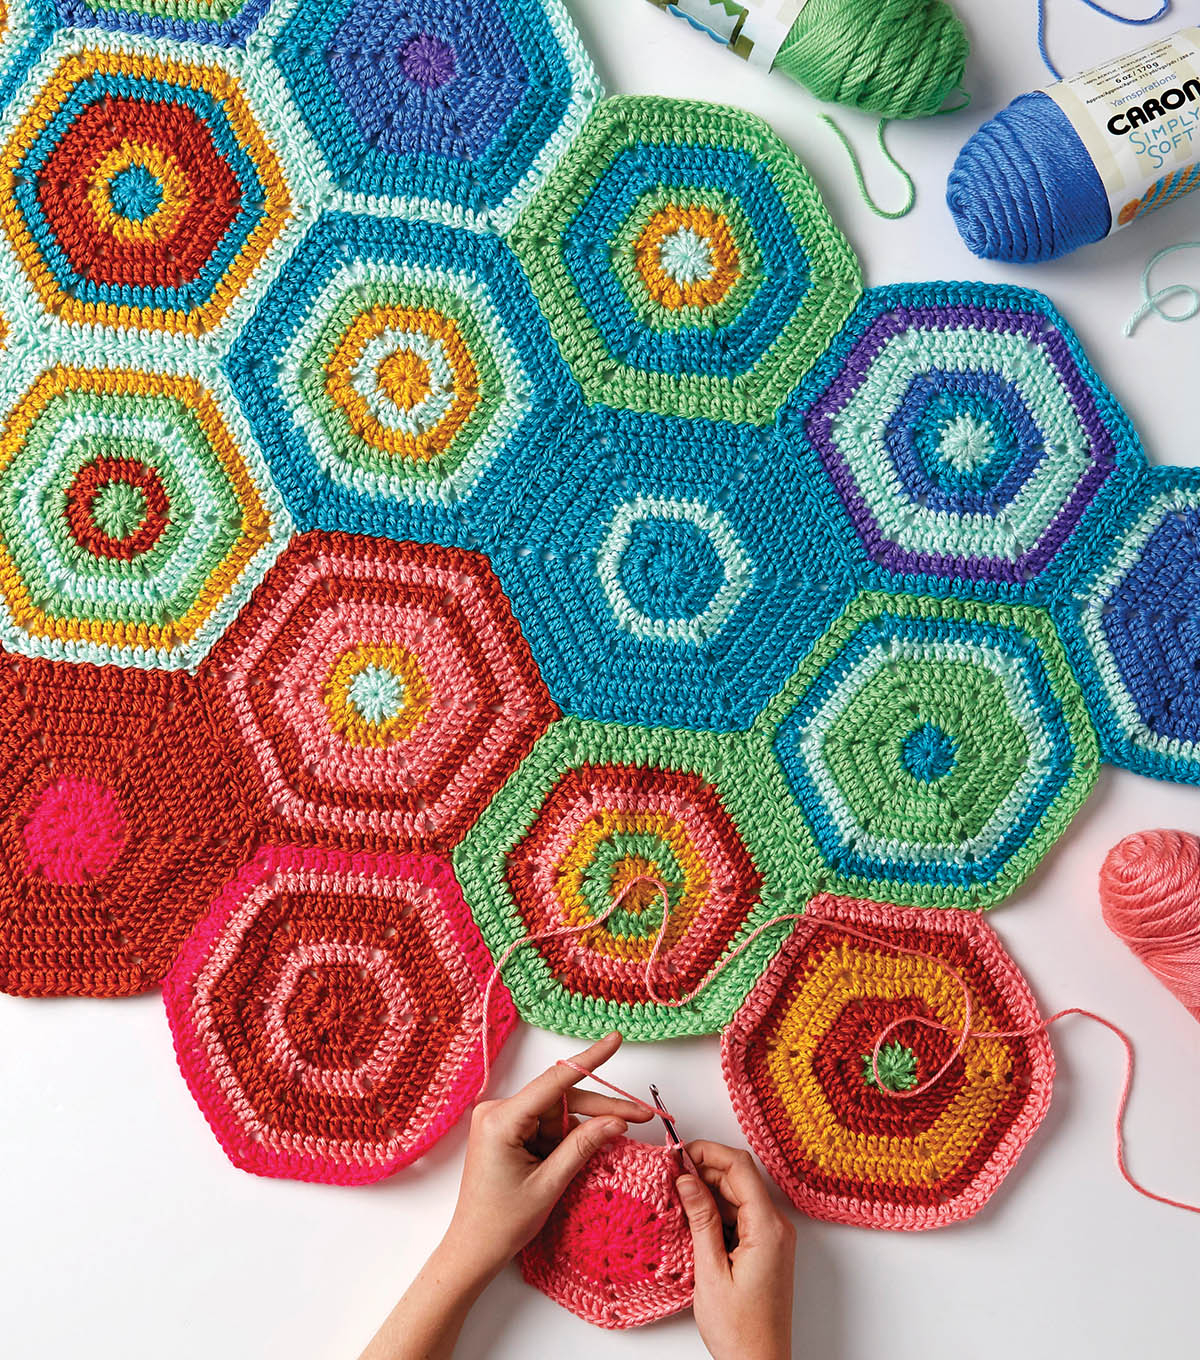 Hexagon Crochet Pattern How To Make A One A Day Crochet Hexagon Temperature Blanket Joann